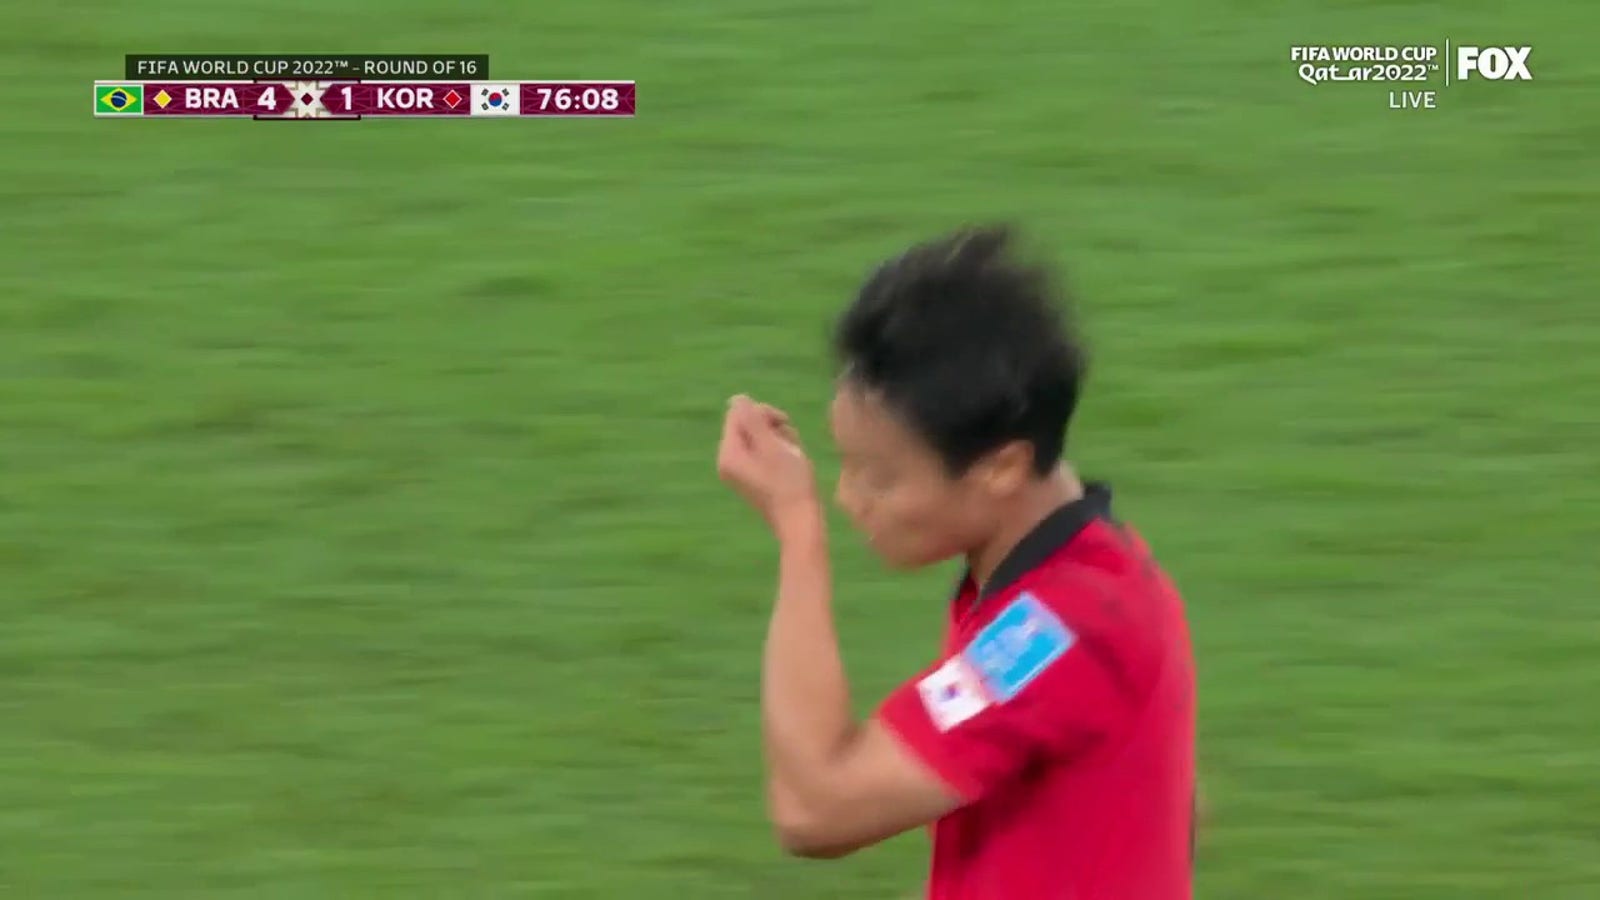 South Korea's Paik Seung-Ho scored against Brazil in the 76'